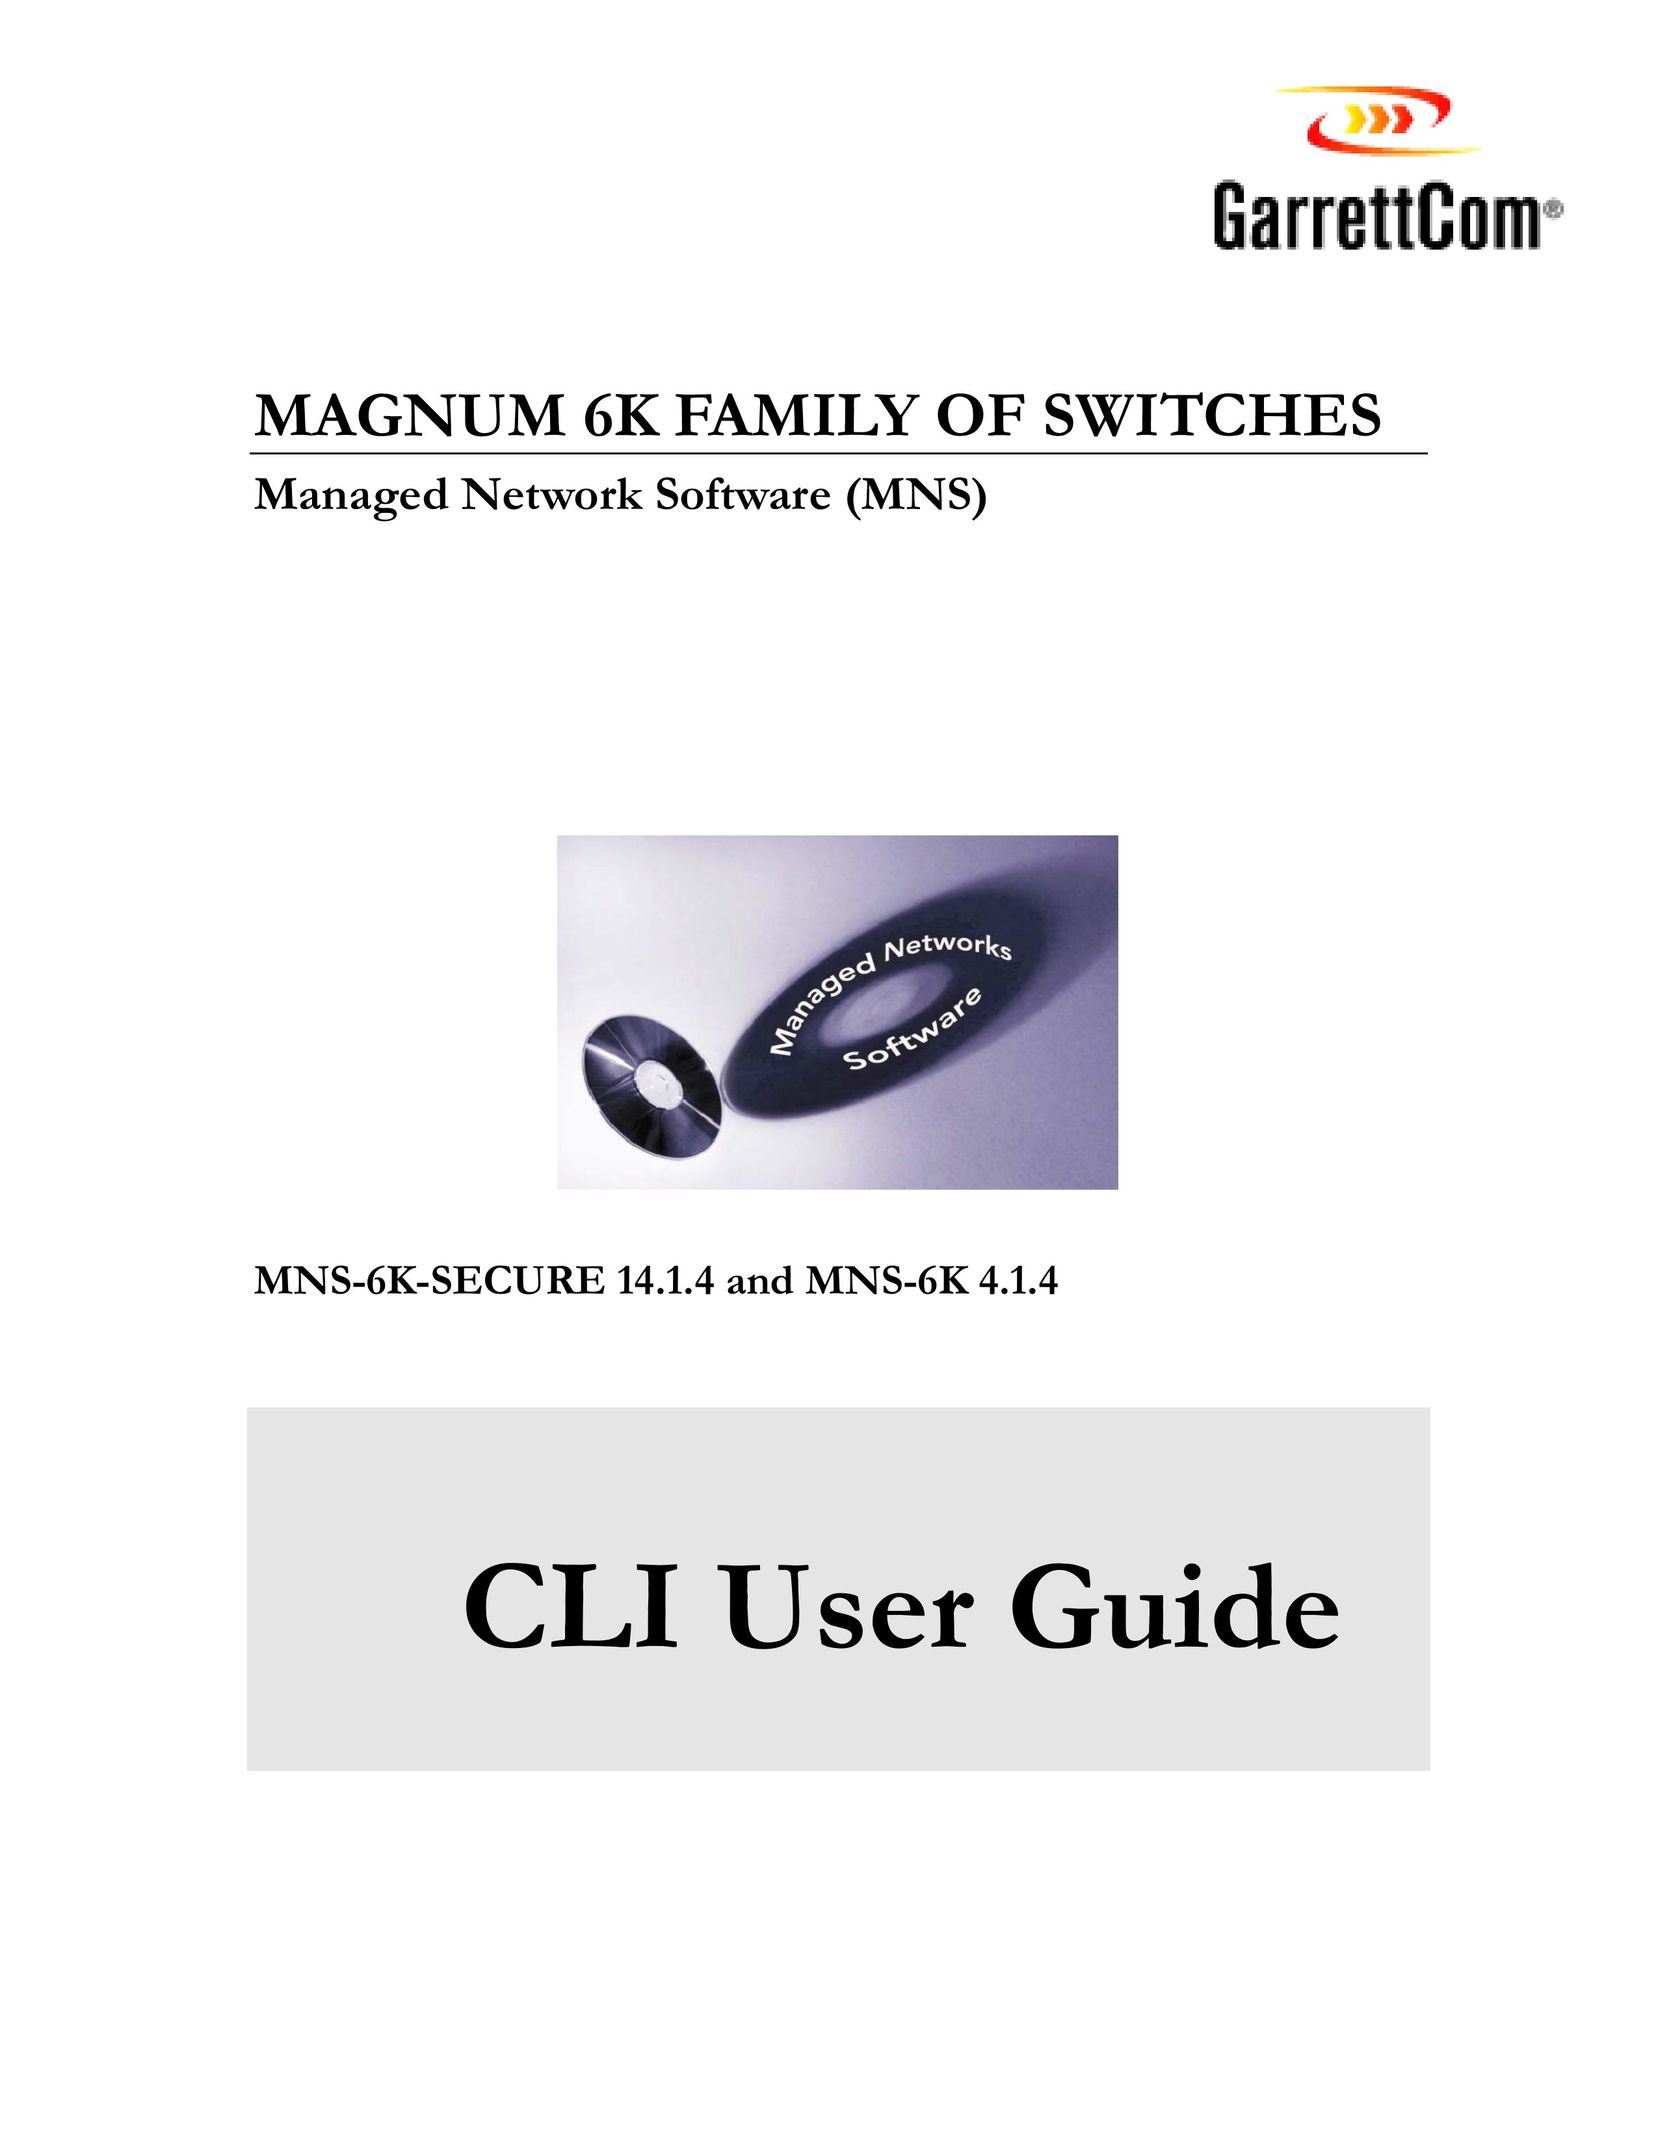 GarrettCom MNS-6K-SECURE 14.1.4 Switch User Manual